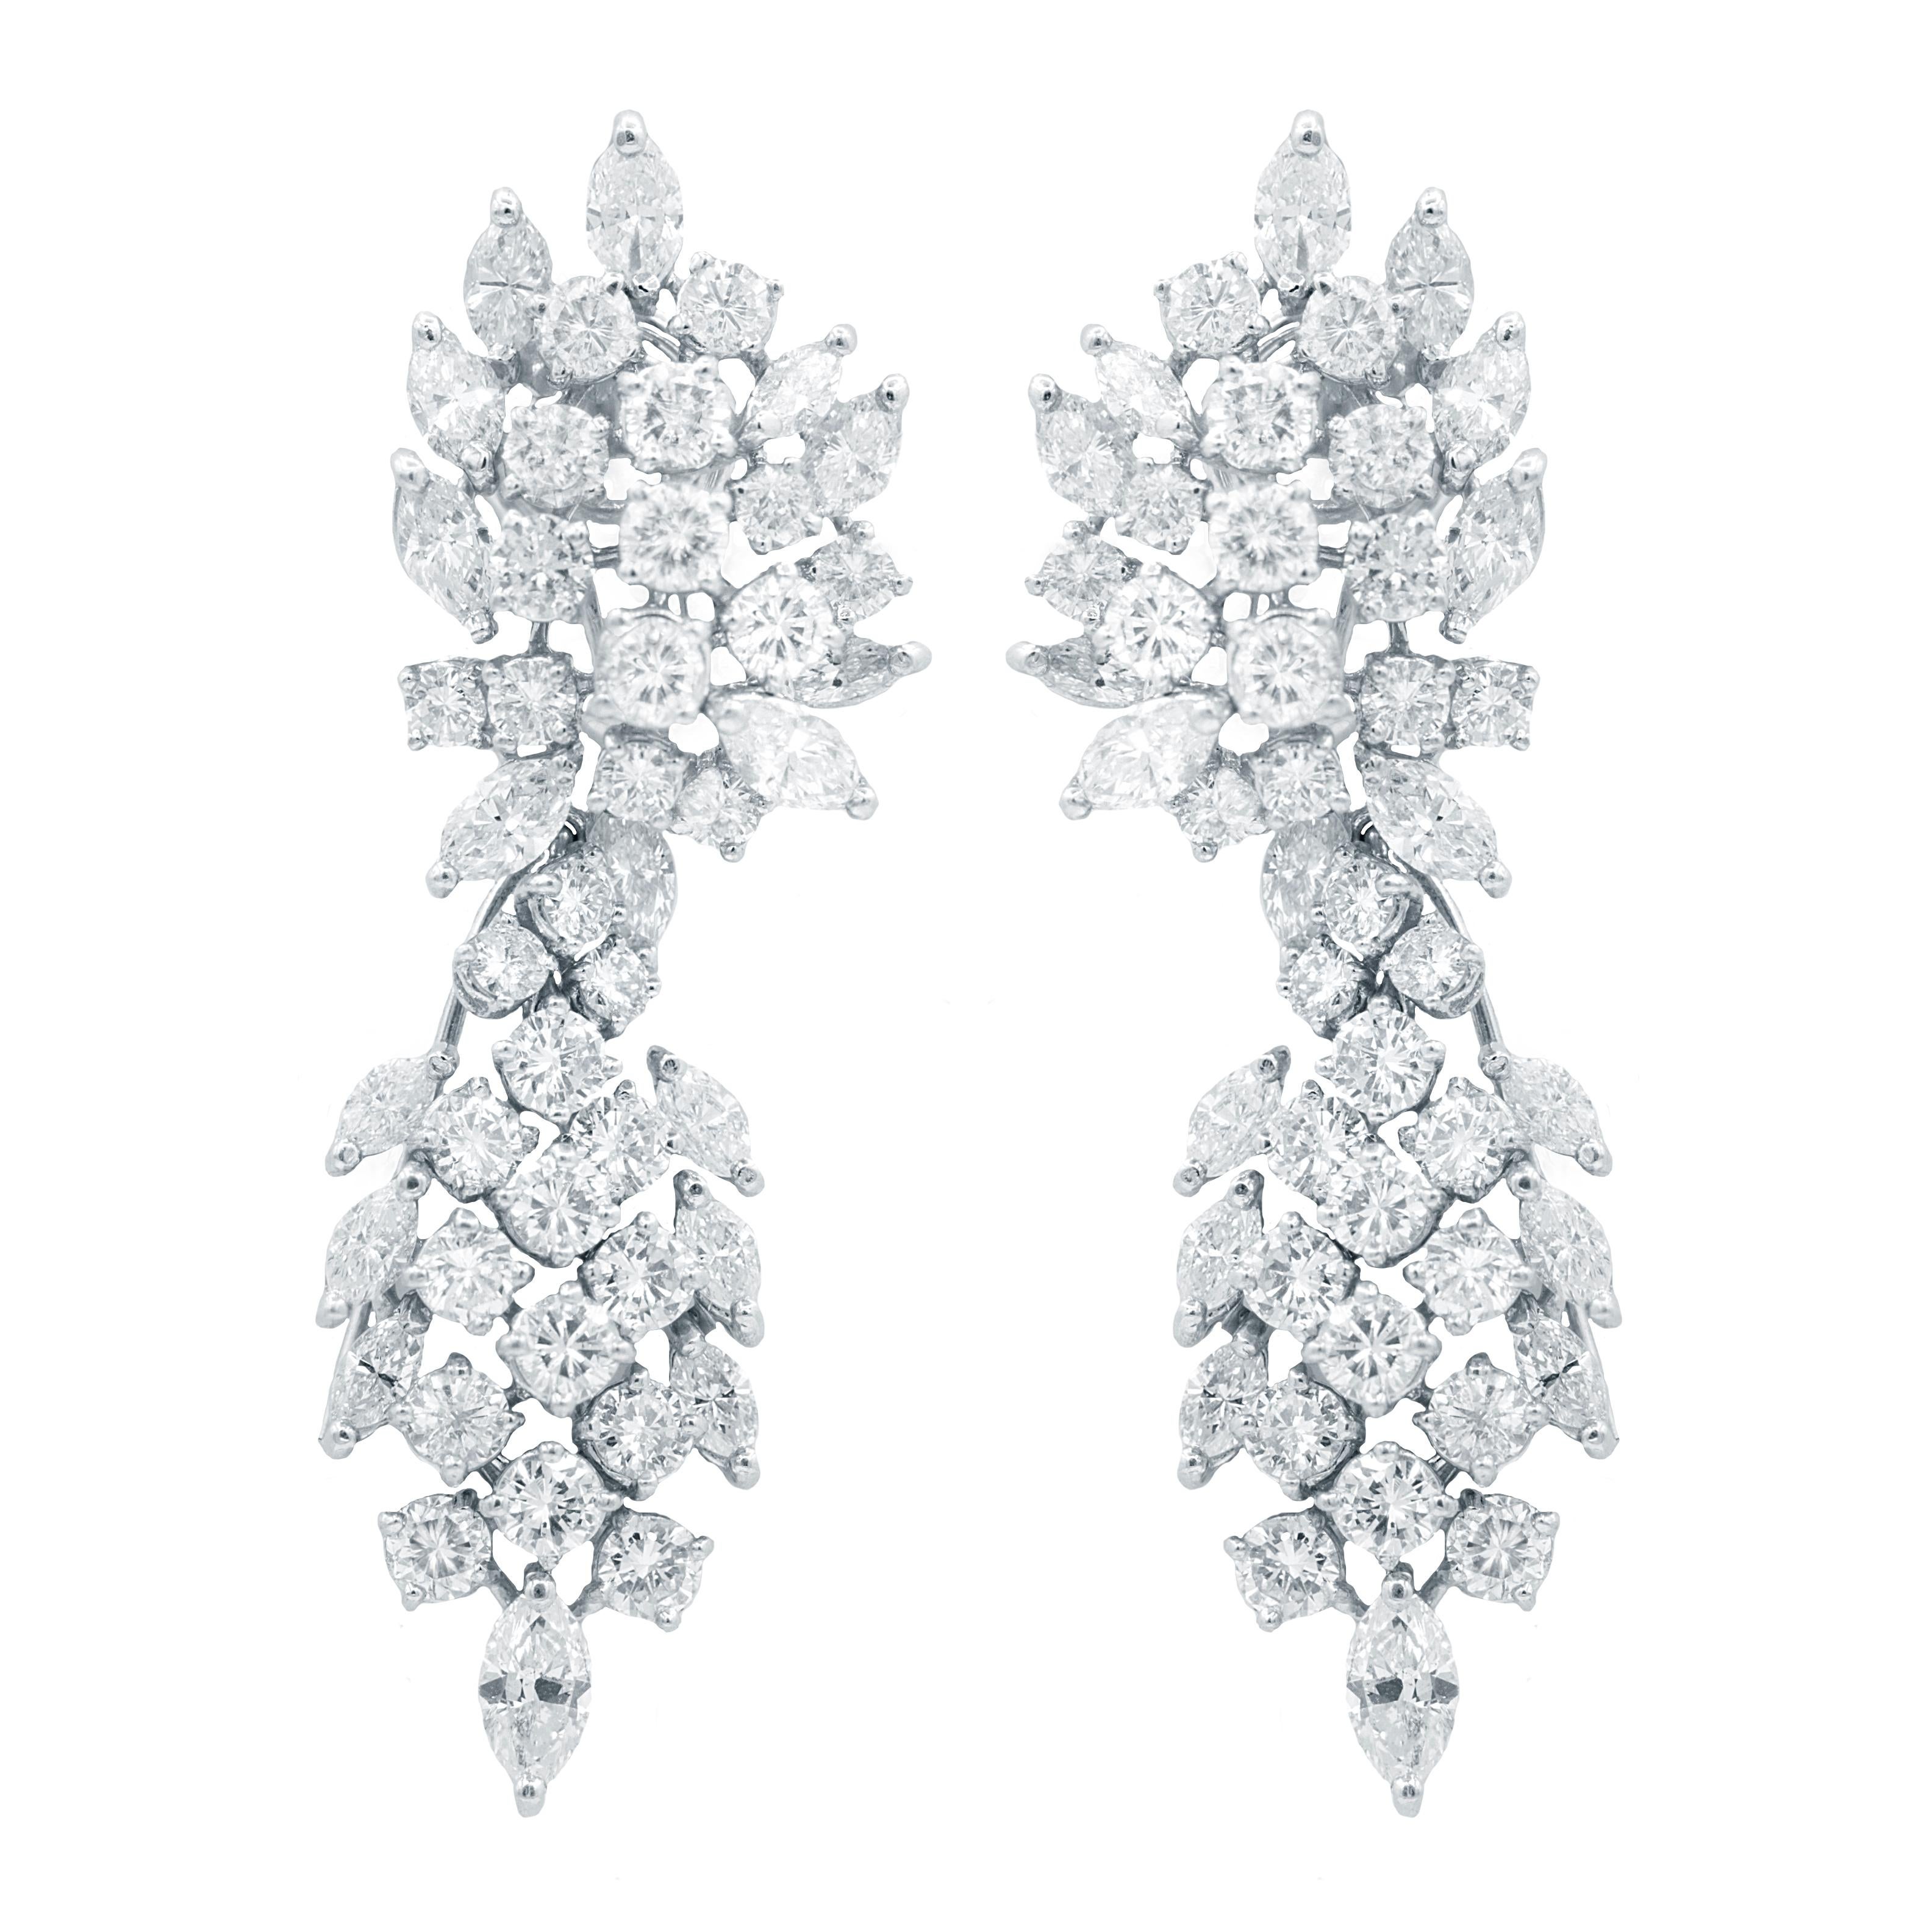 Cluster/rd*/mq*/awa,plat+ Dangle*
Deattachable Platinum, 13.00 Carat Diamond Earrings.
